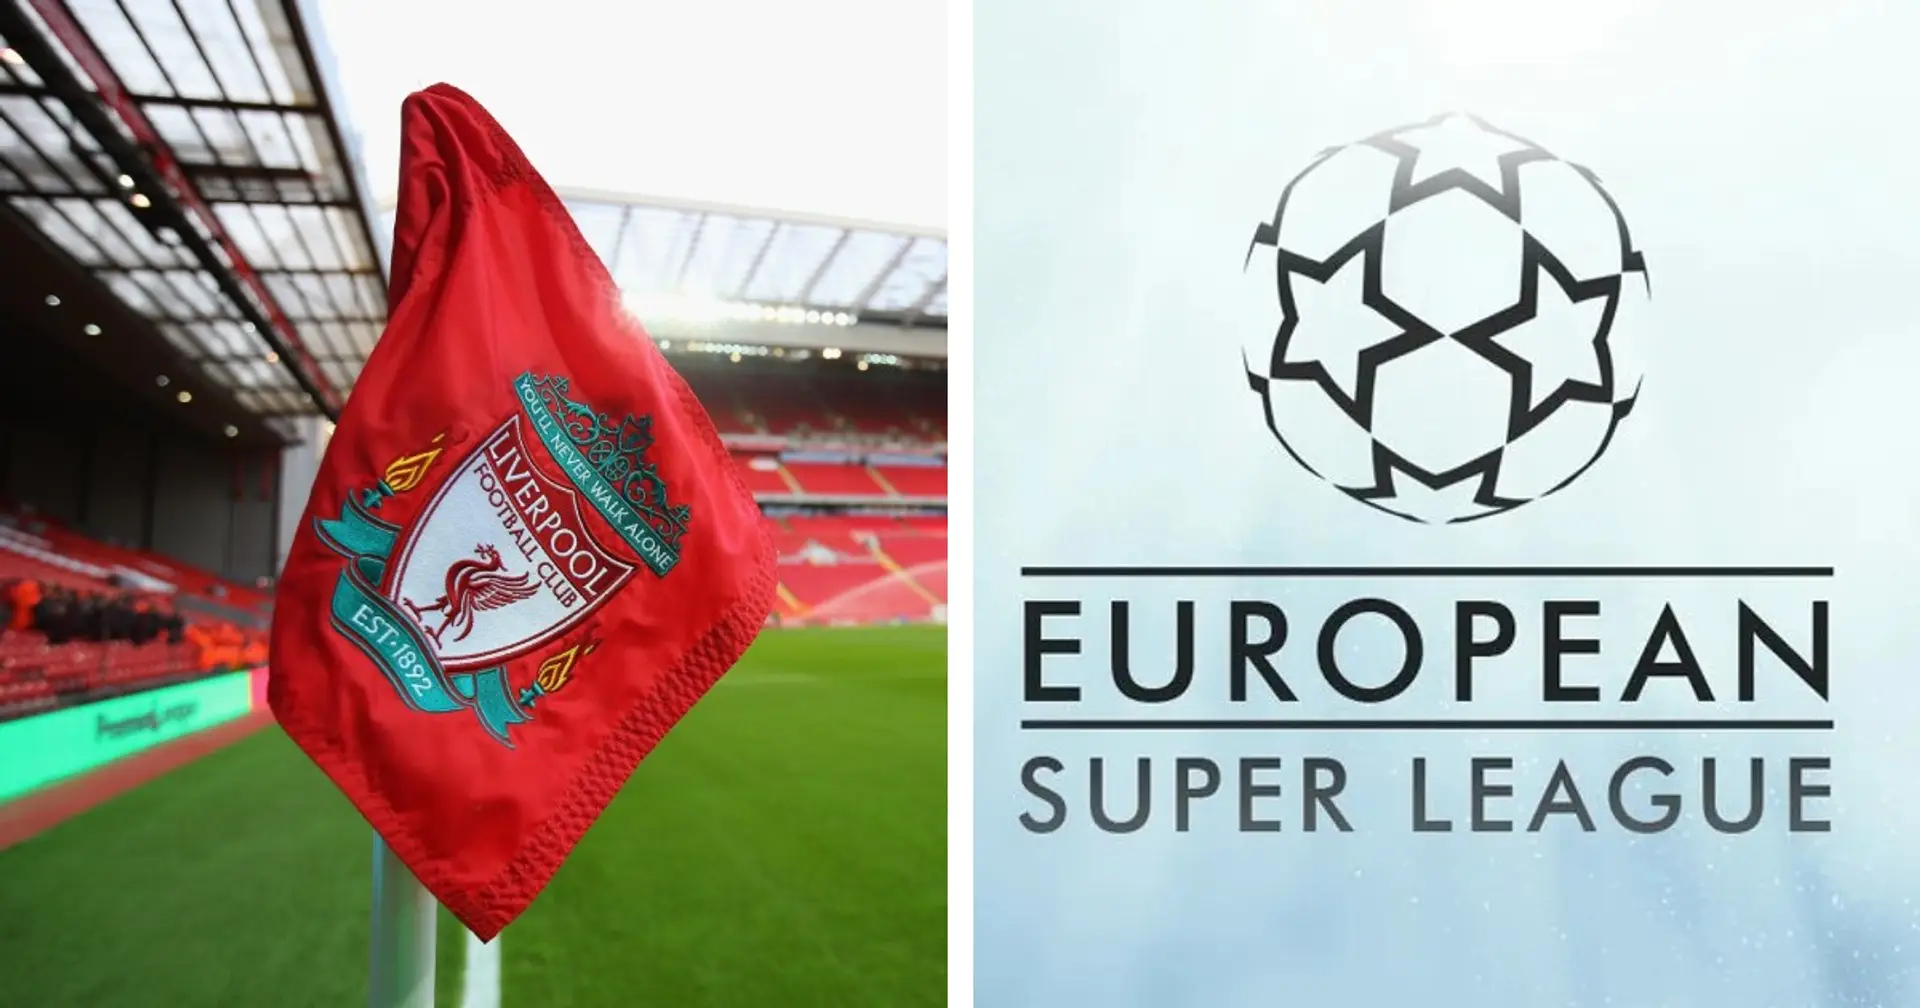 Liverpool release statement on European Super League